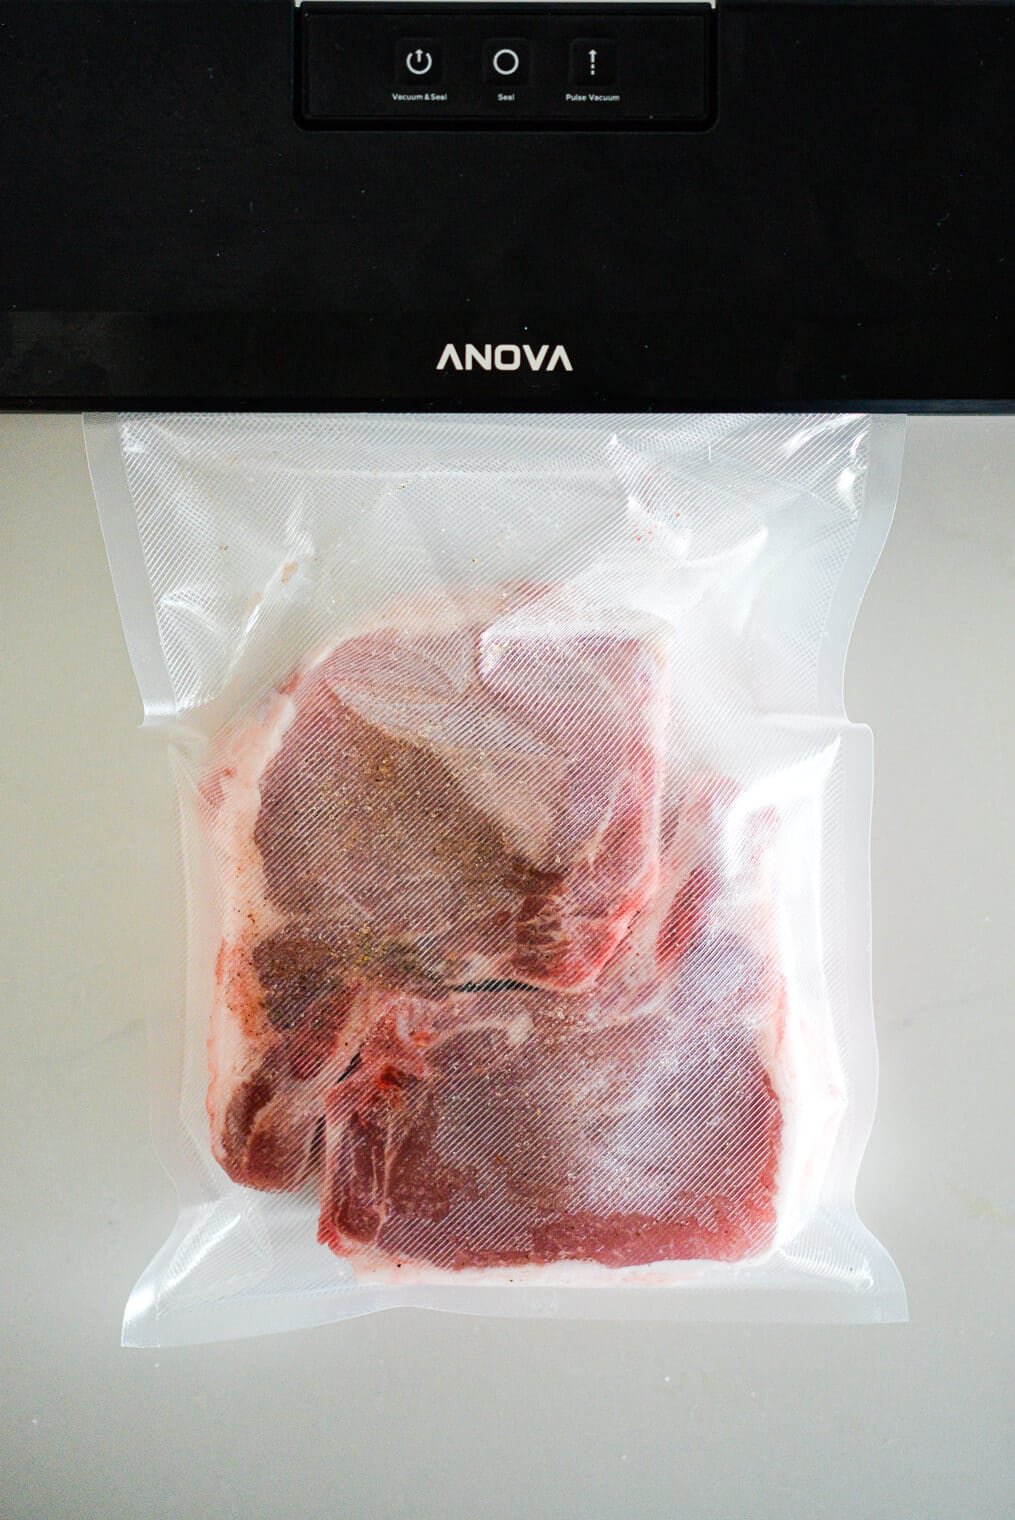 Two bone-in pork chops in a sous vide bag.